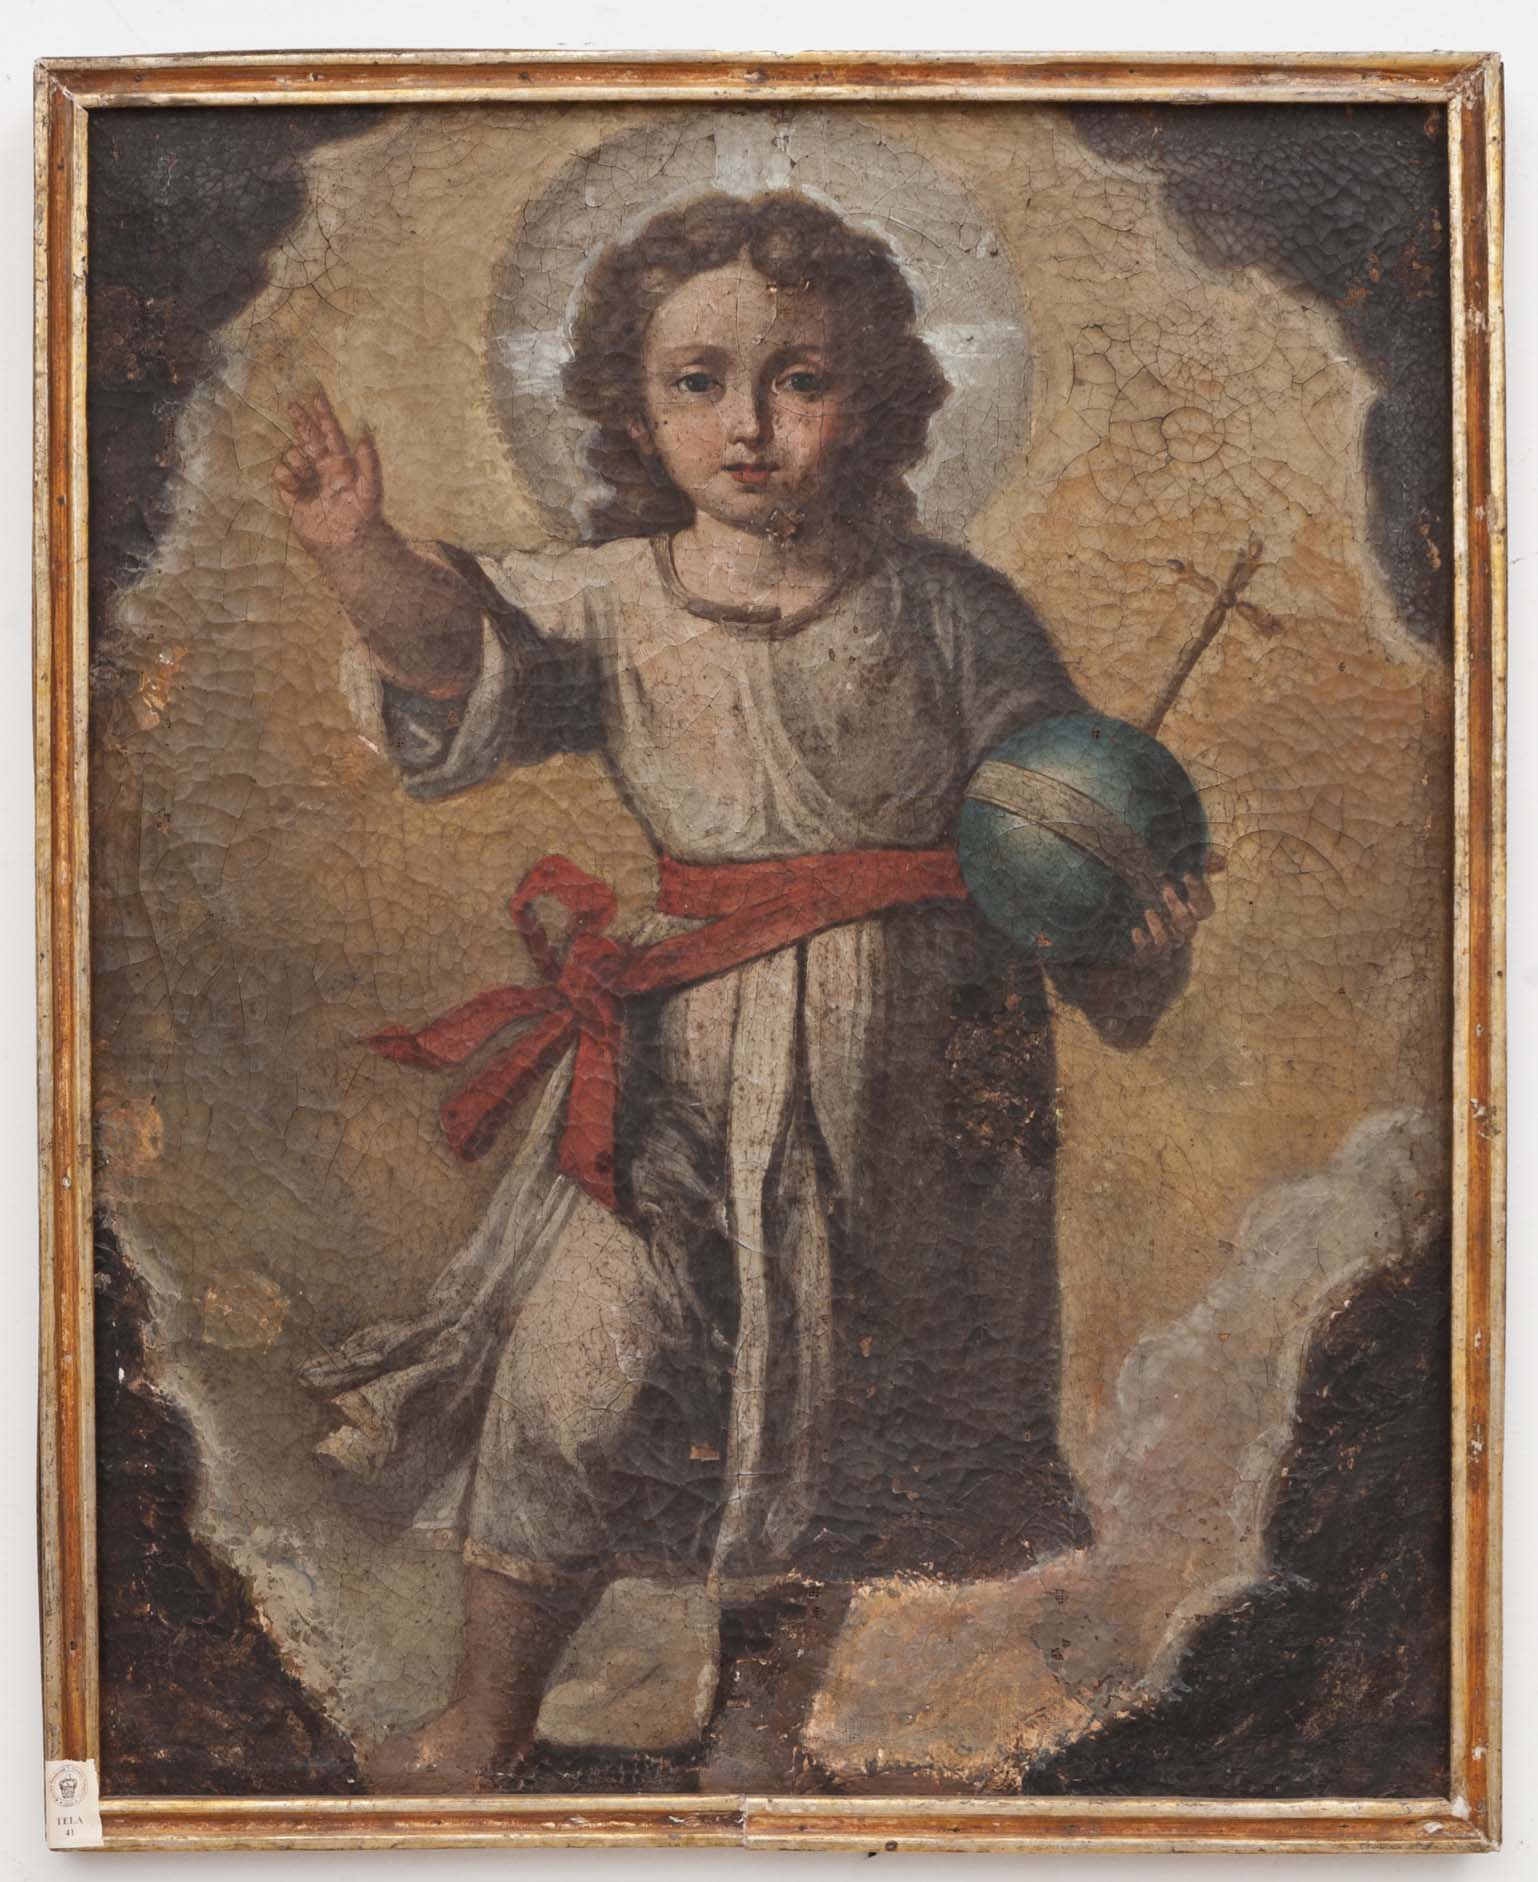 GESÙ BAMBINO SALVATOR MUNDI (dipinto - dipinto su tela, opera isolata) di Ignoto (maniera) - ambito Italia meridionale (XVIII)